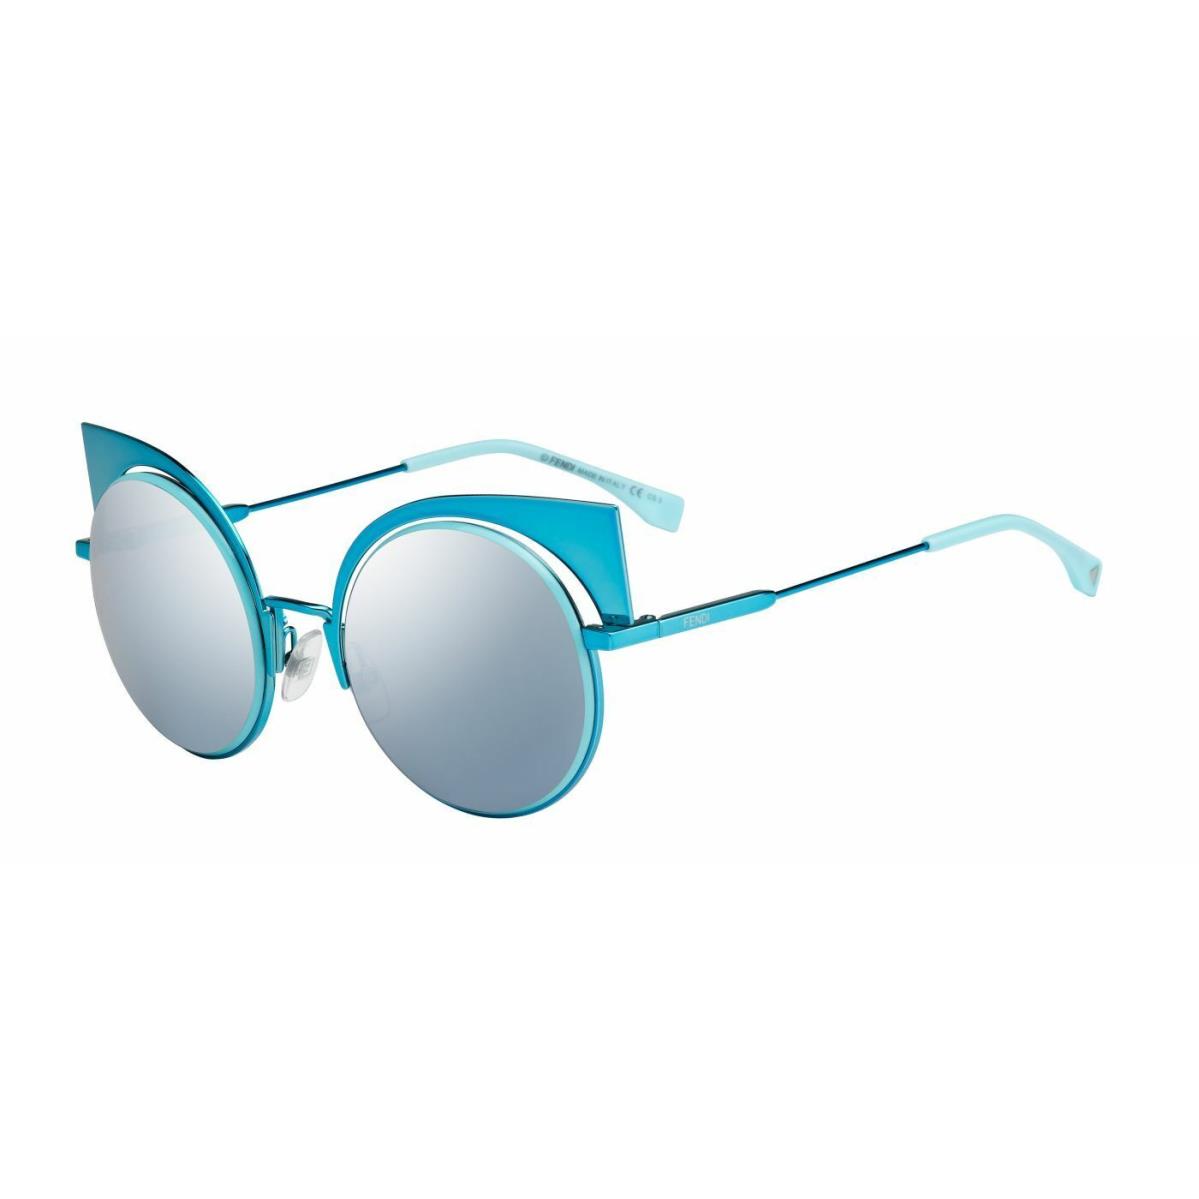 Fendi Eyeshine FF0177S W5I Aqua Blue Mirrored Metal Sunglasses - Blue Aqua , Turquoise Blue Frame, Aqua Blue Mirrored Lens